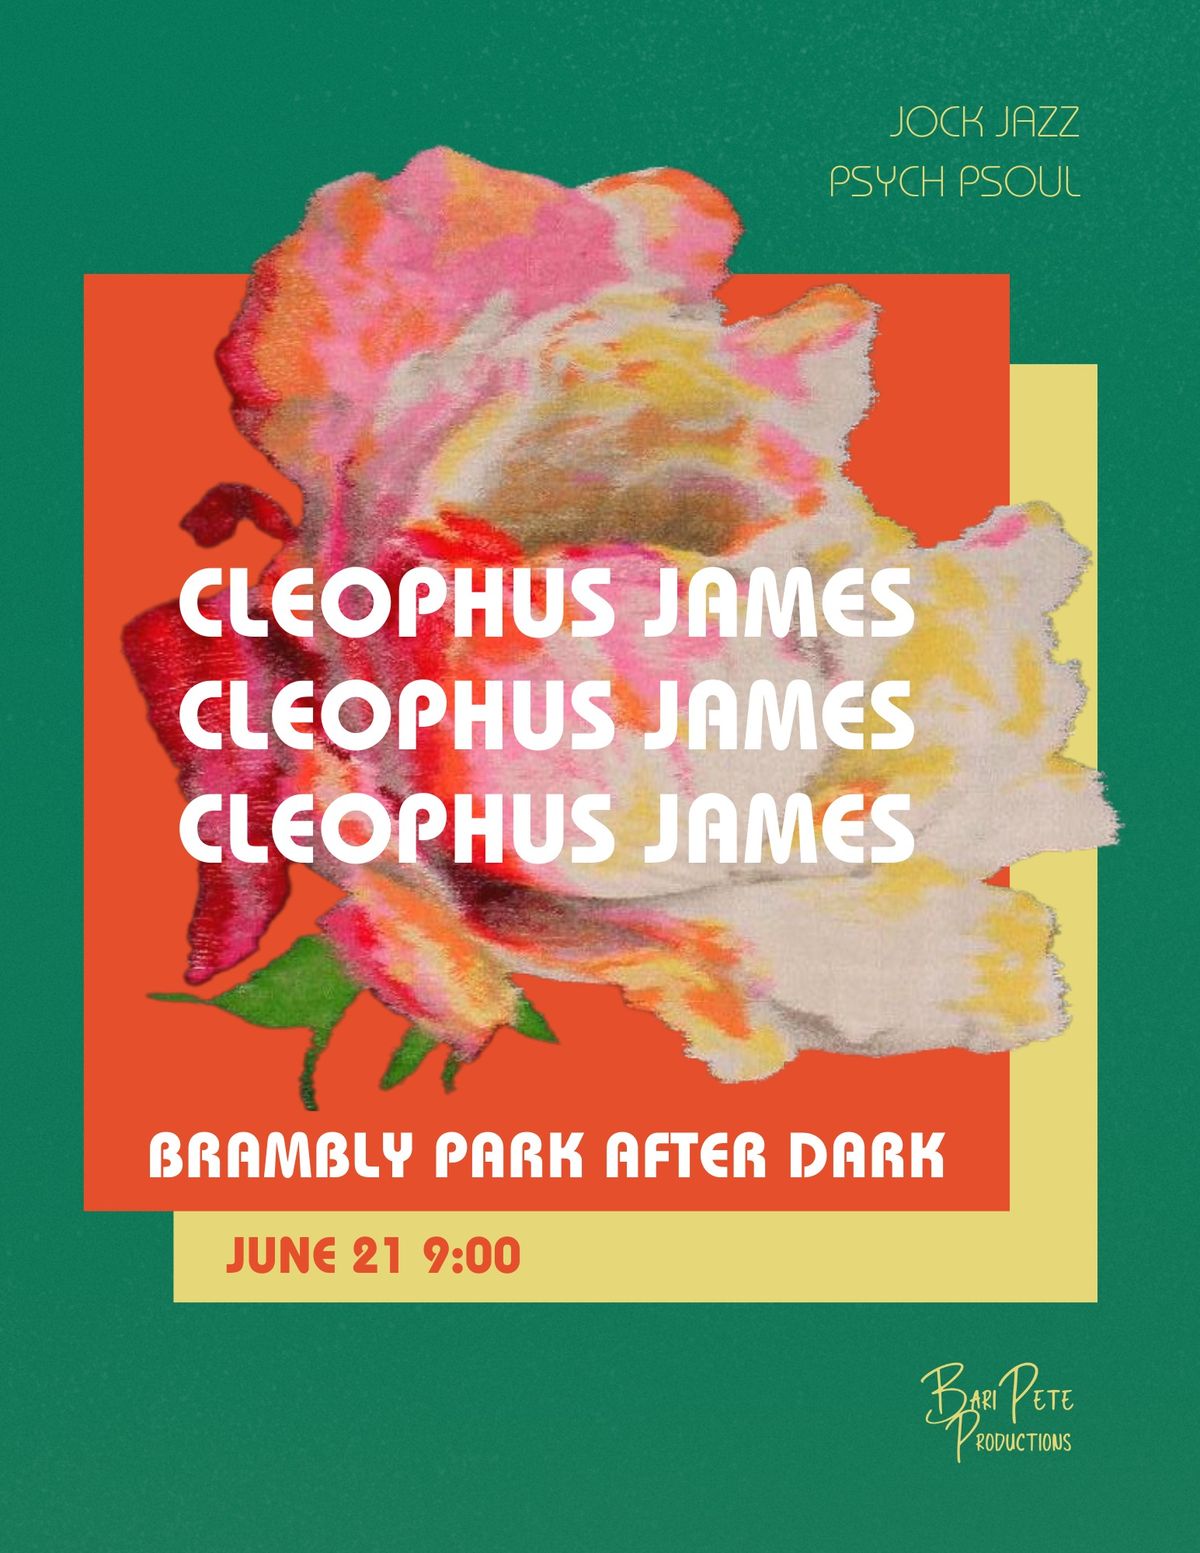 After Dark: Cleophus James